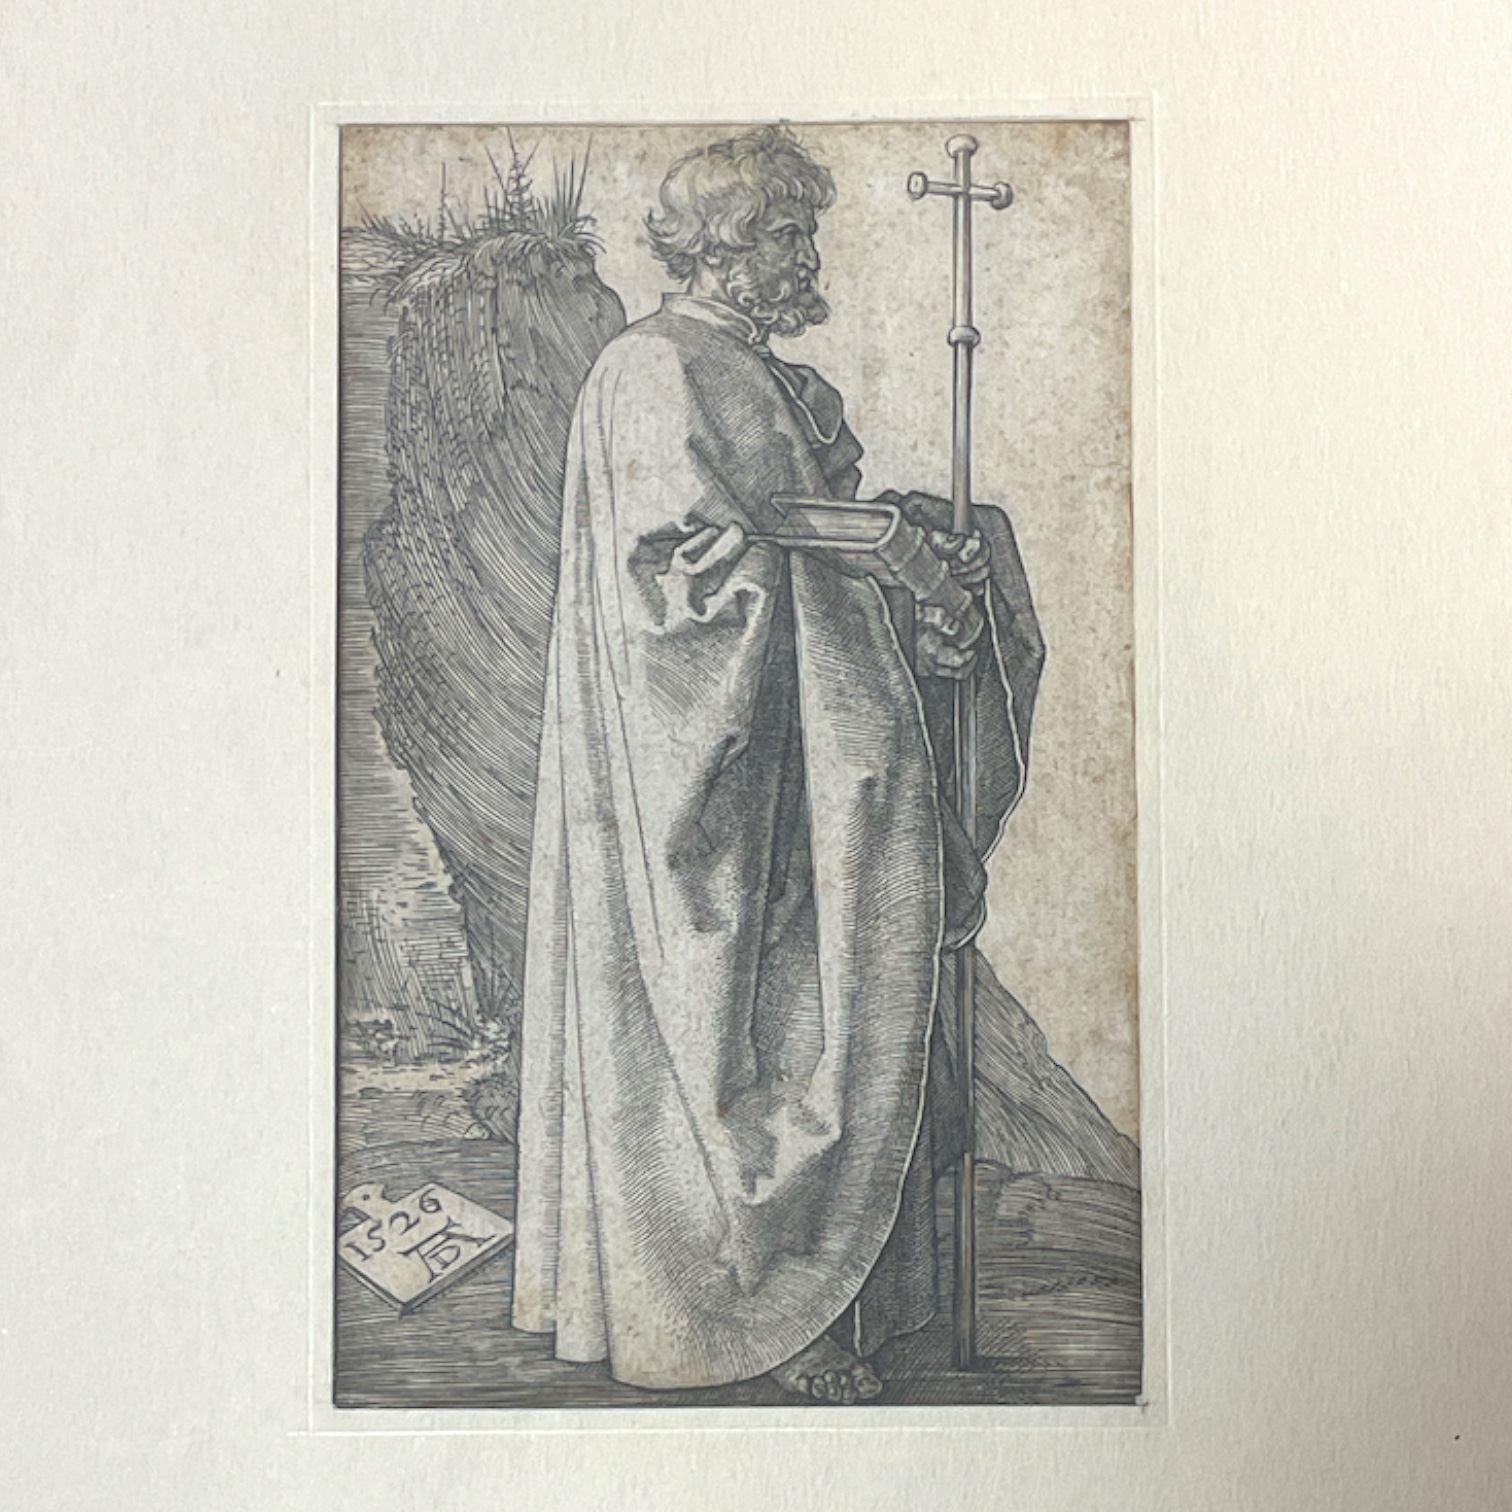 Albrecht Durer, the Apostle St Philip standing on a landscape holding a cross 7.5cm x 12cm  on paper